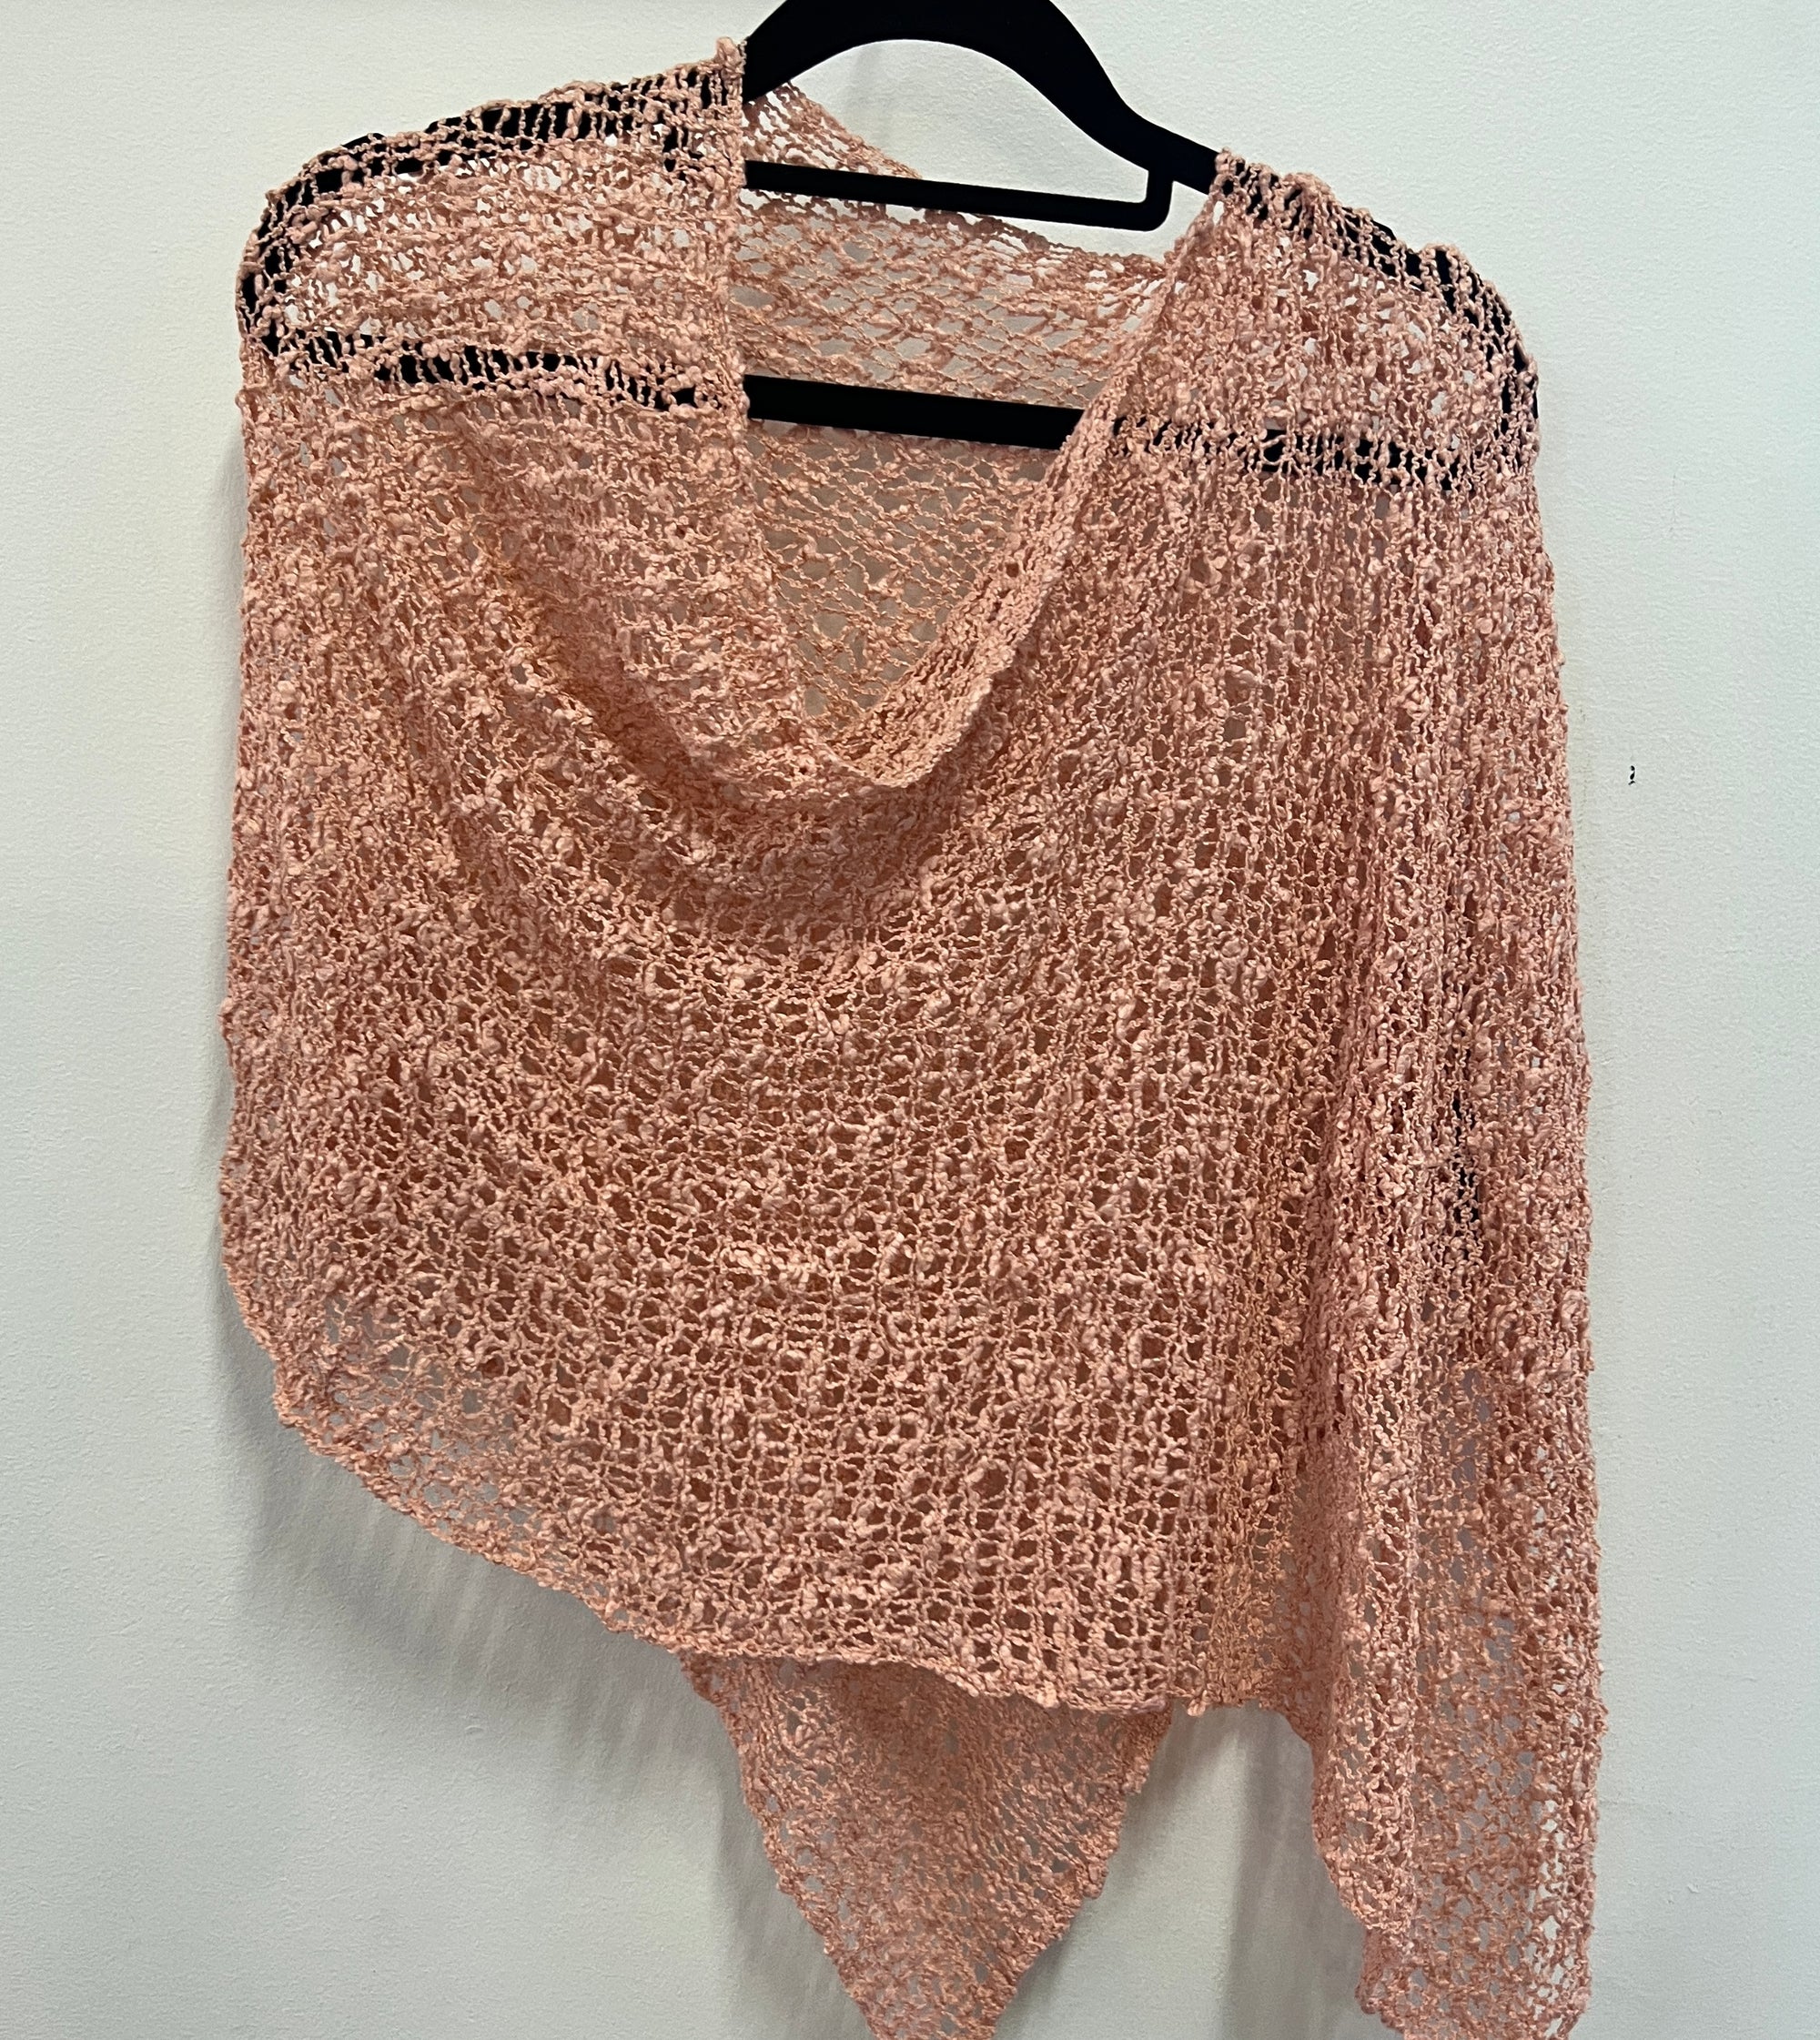 Poncho Open Weave Knit